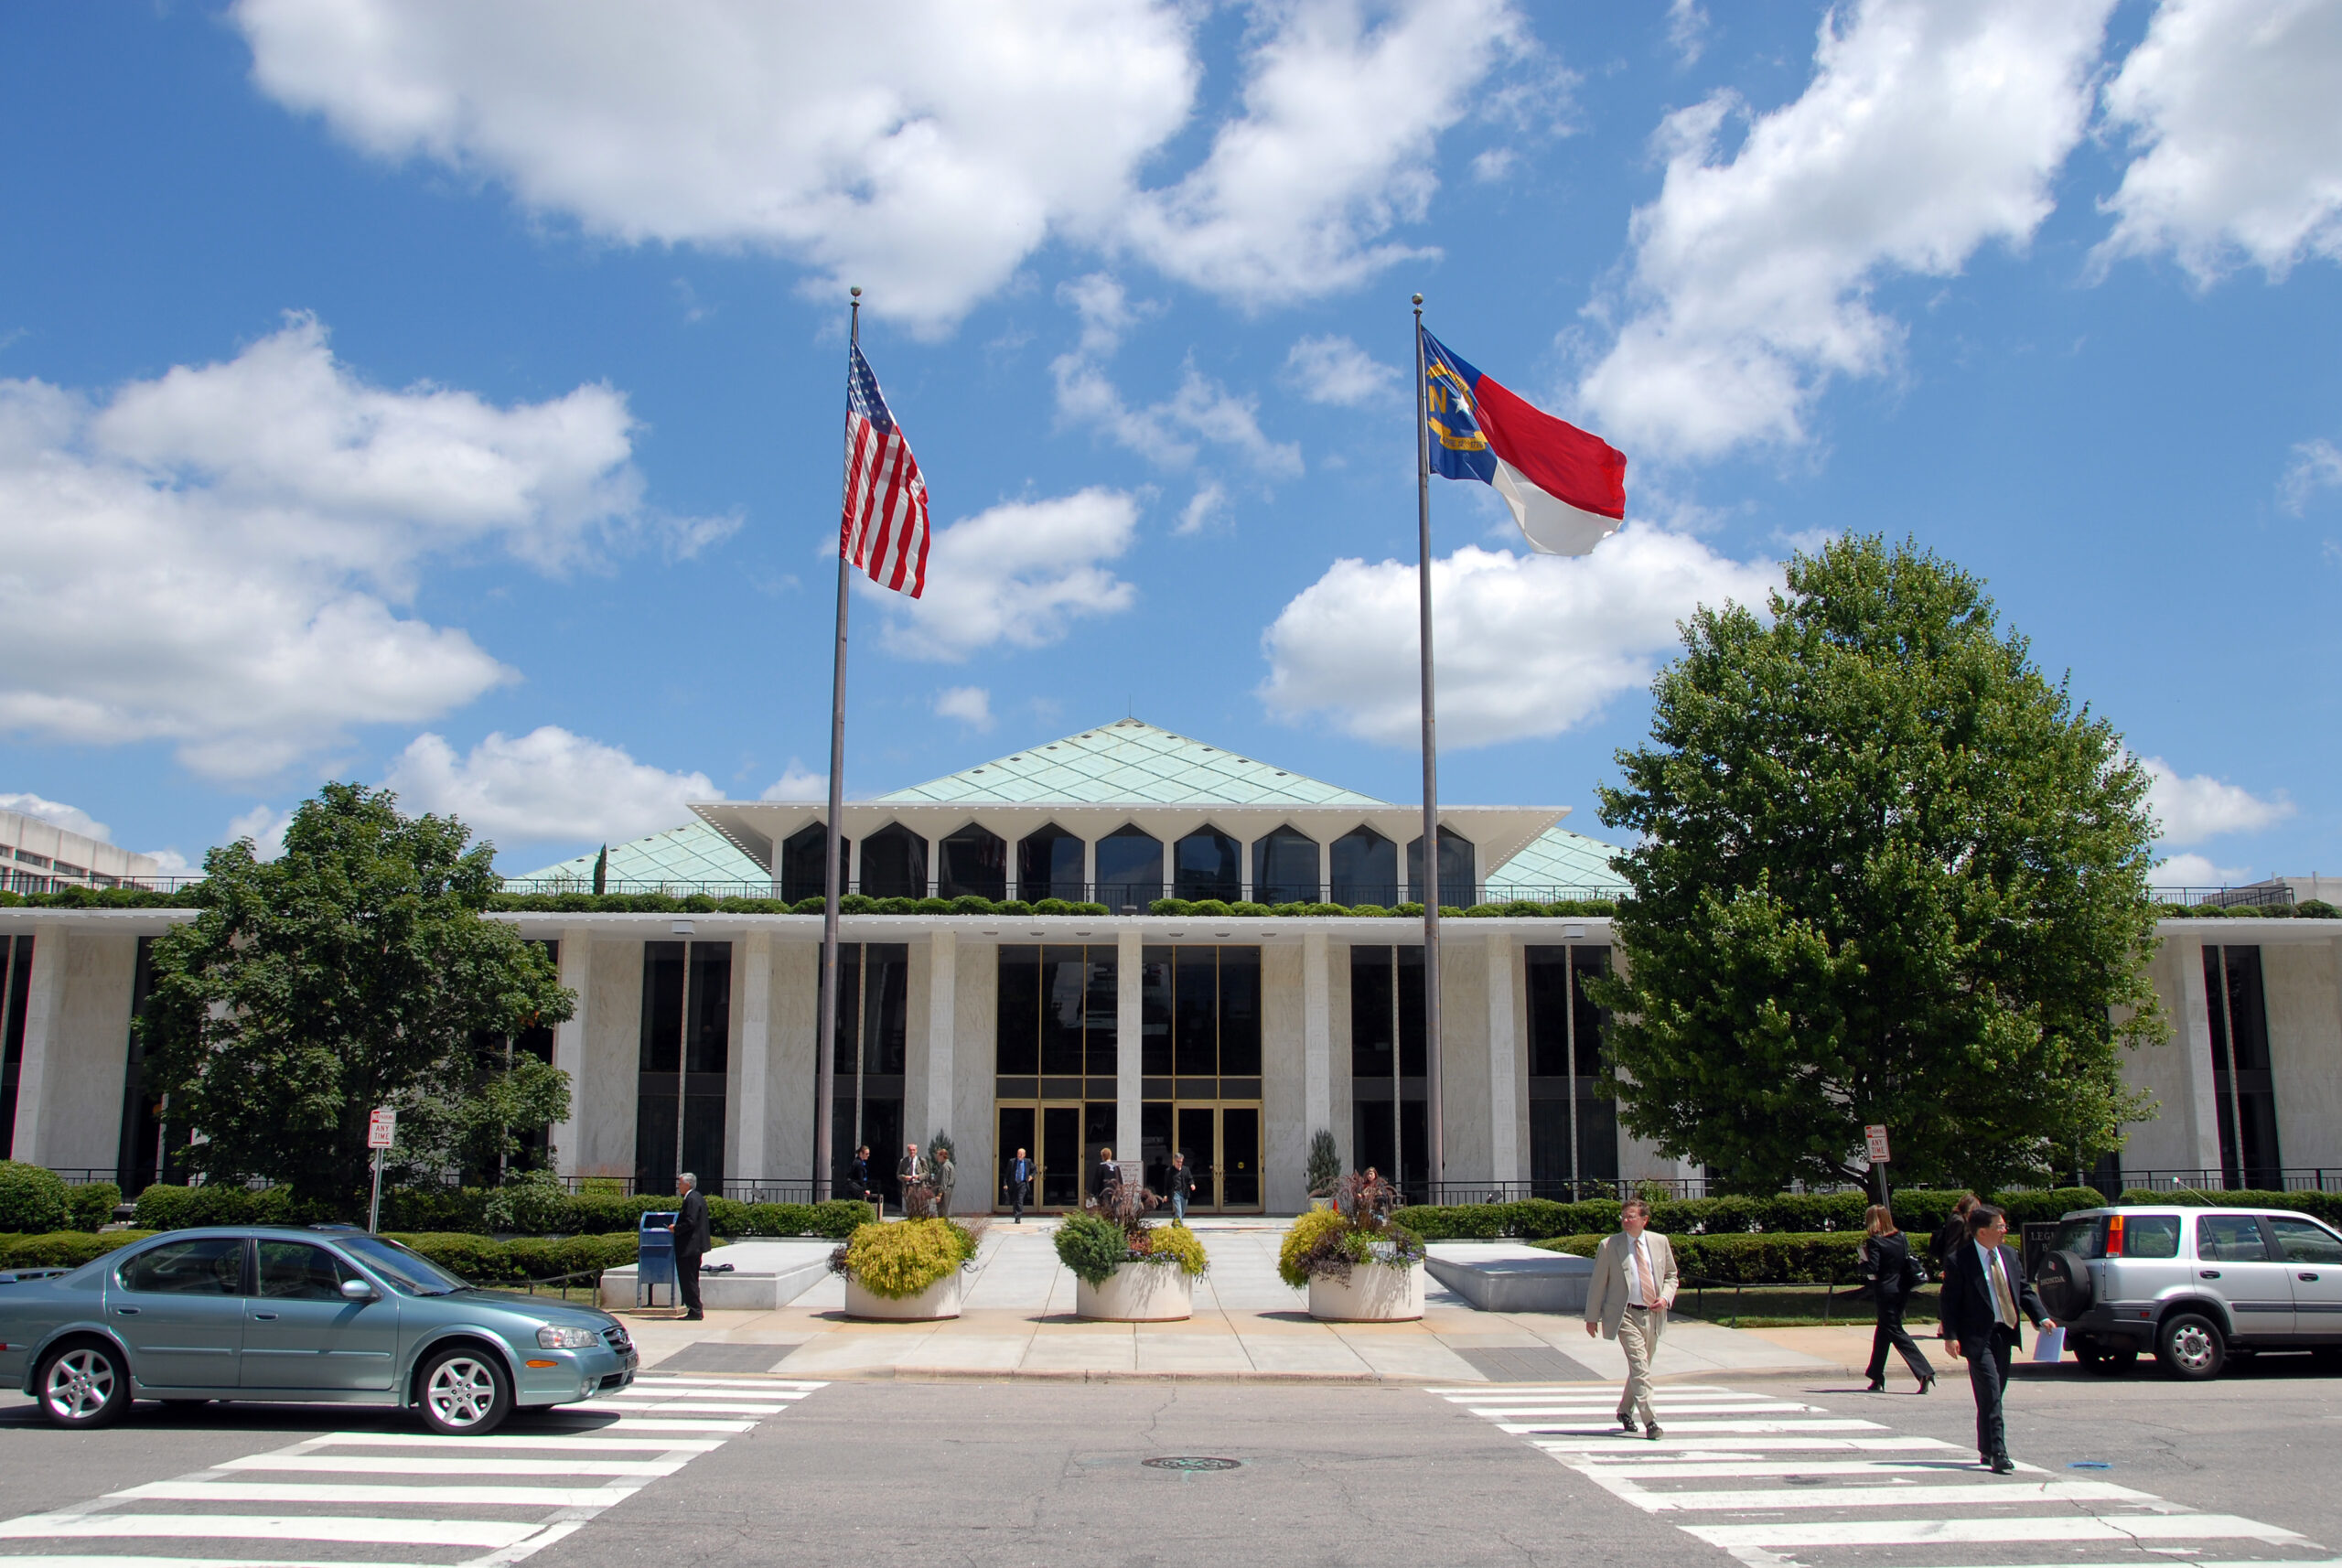 North Carolina State Legislature Building